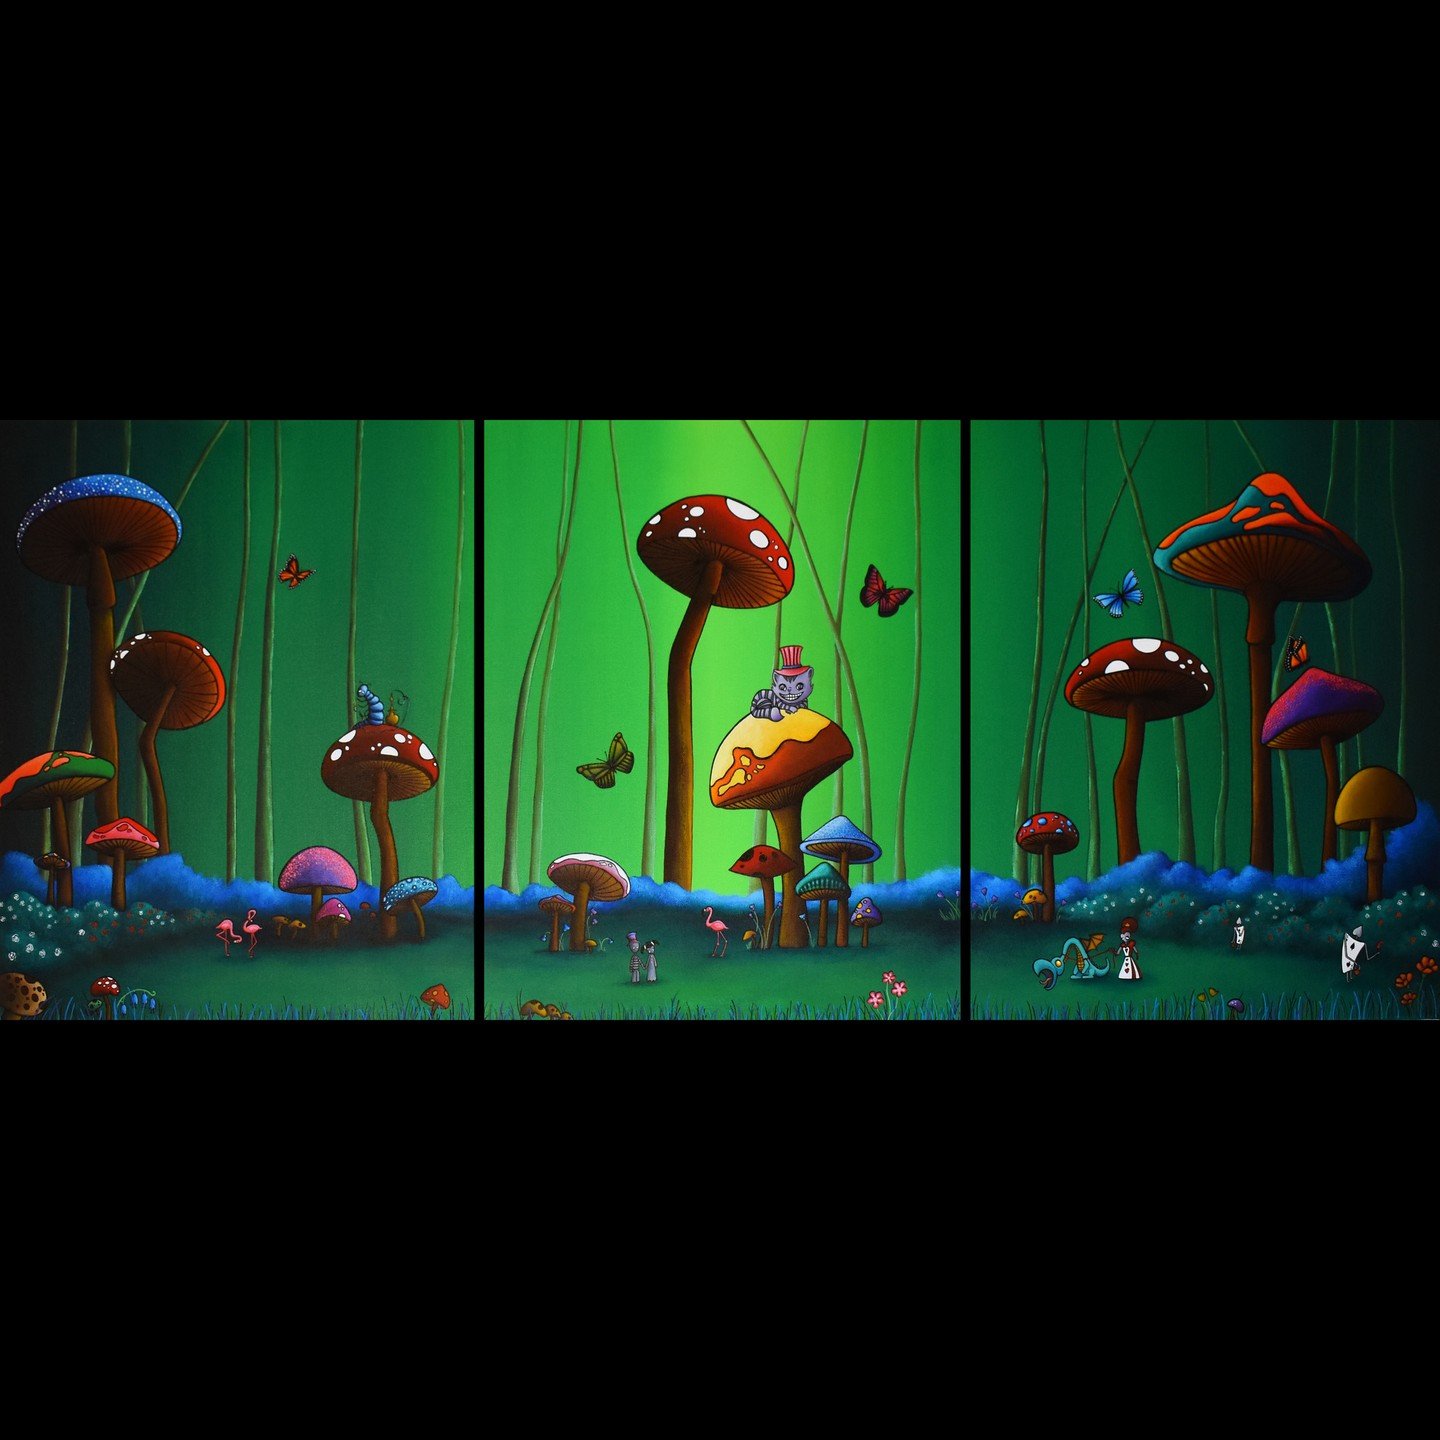 &quot;An Afternoon in Wonderland&quot;
Original Custom Painting by Jaime Best

-
-
-

#art #painting #originalart #wonderland #mushroomforest #mushrooms #colorful #acrylicpainting #bestartstudios #jaimebest #fantasyart #fairytale #popsurrealism